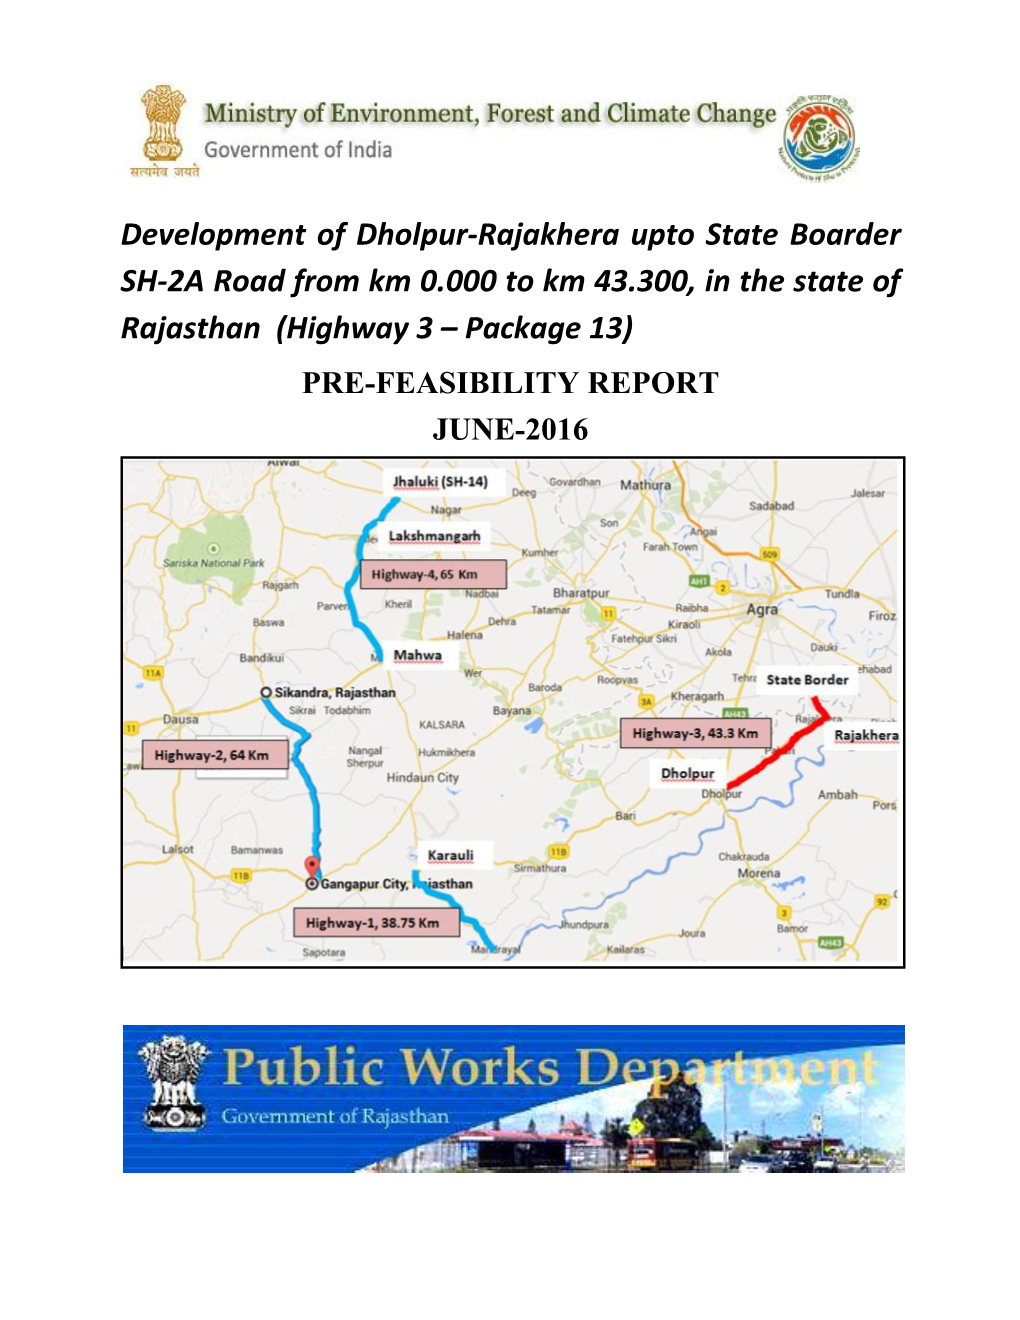 Development of Dholpur-Rajakhera Upto State Boarder SH-2A Road